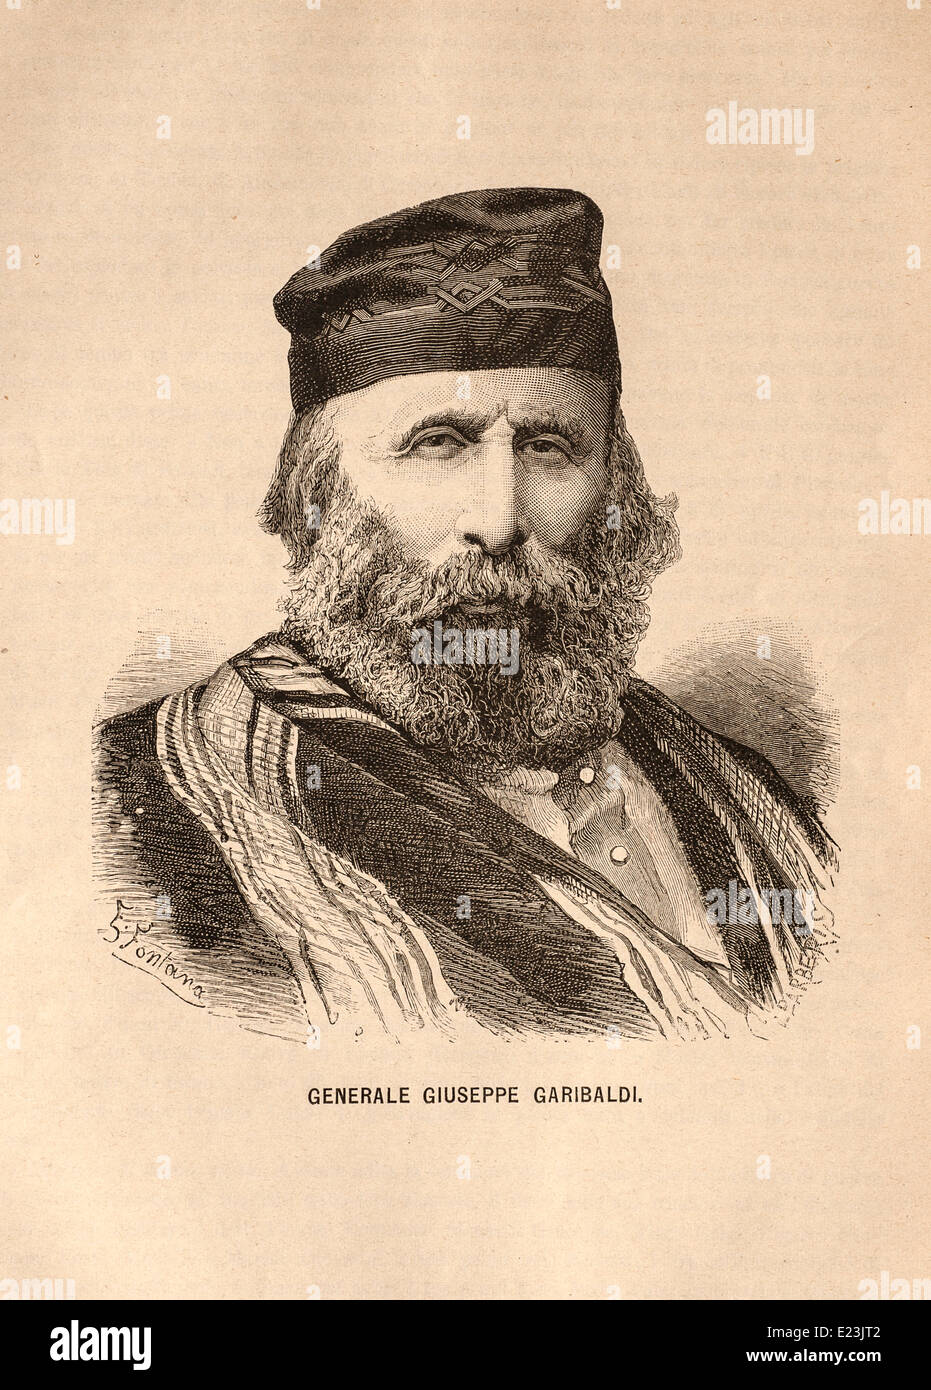 Giuseppe Mazzini From the Book of Jessie W. Mario of Life of Mazzini.  The General Giuseppe Garibaldi Stock Photo